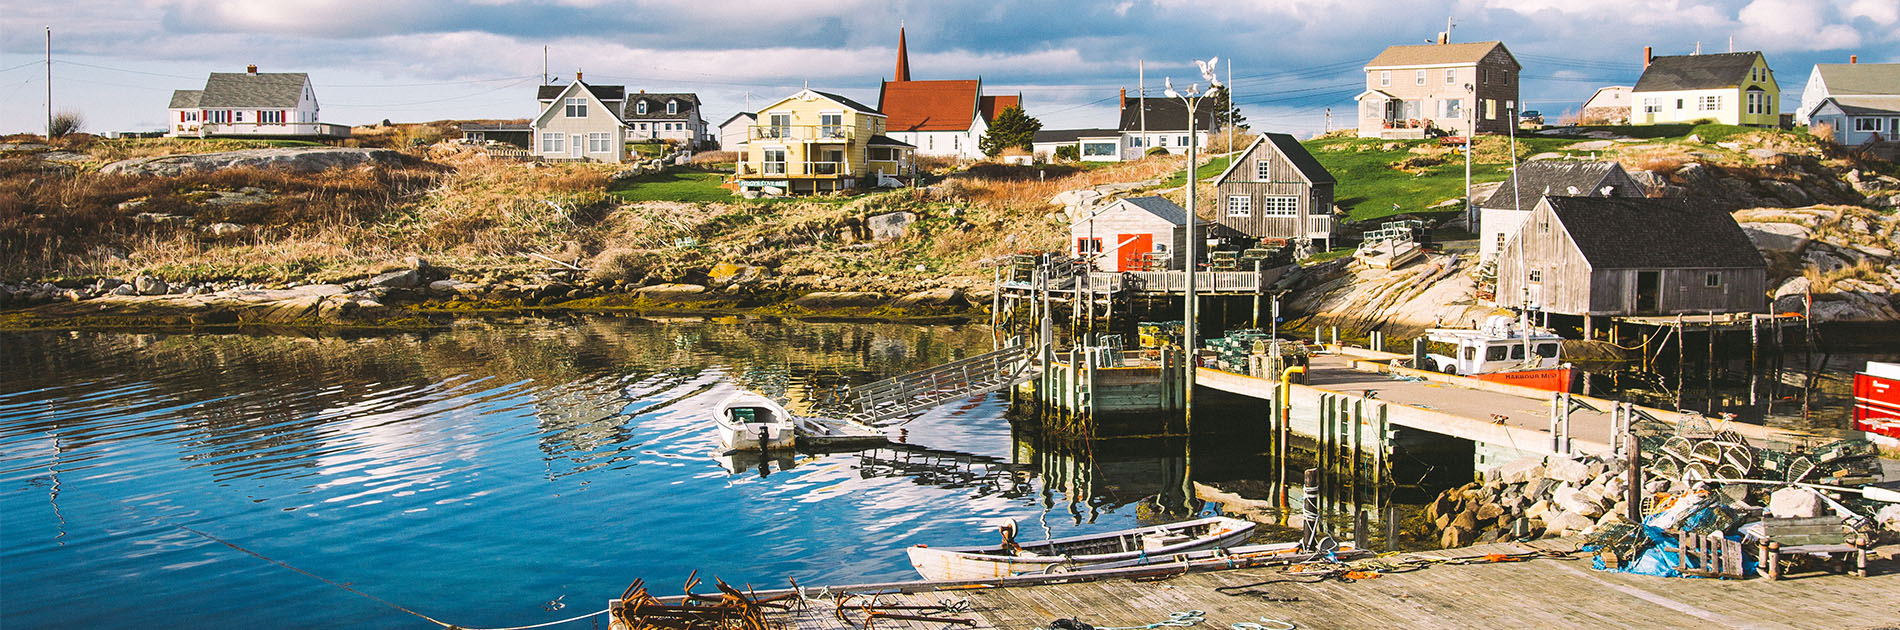 Peggy's Cove Village, Nova Scotia